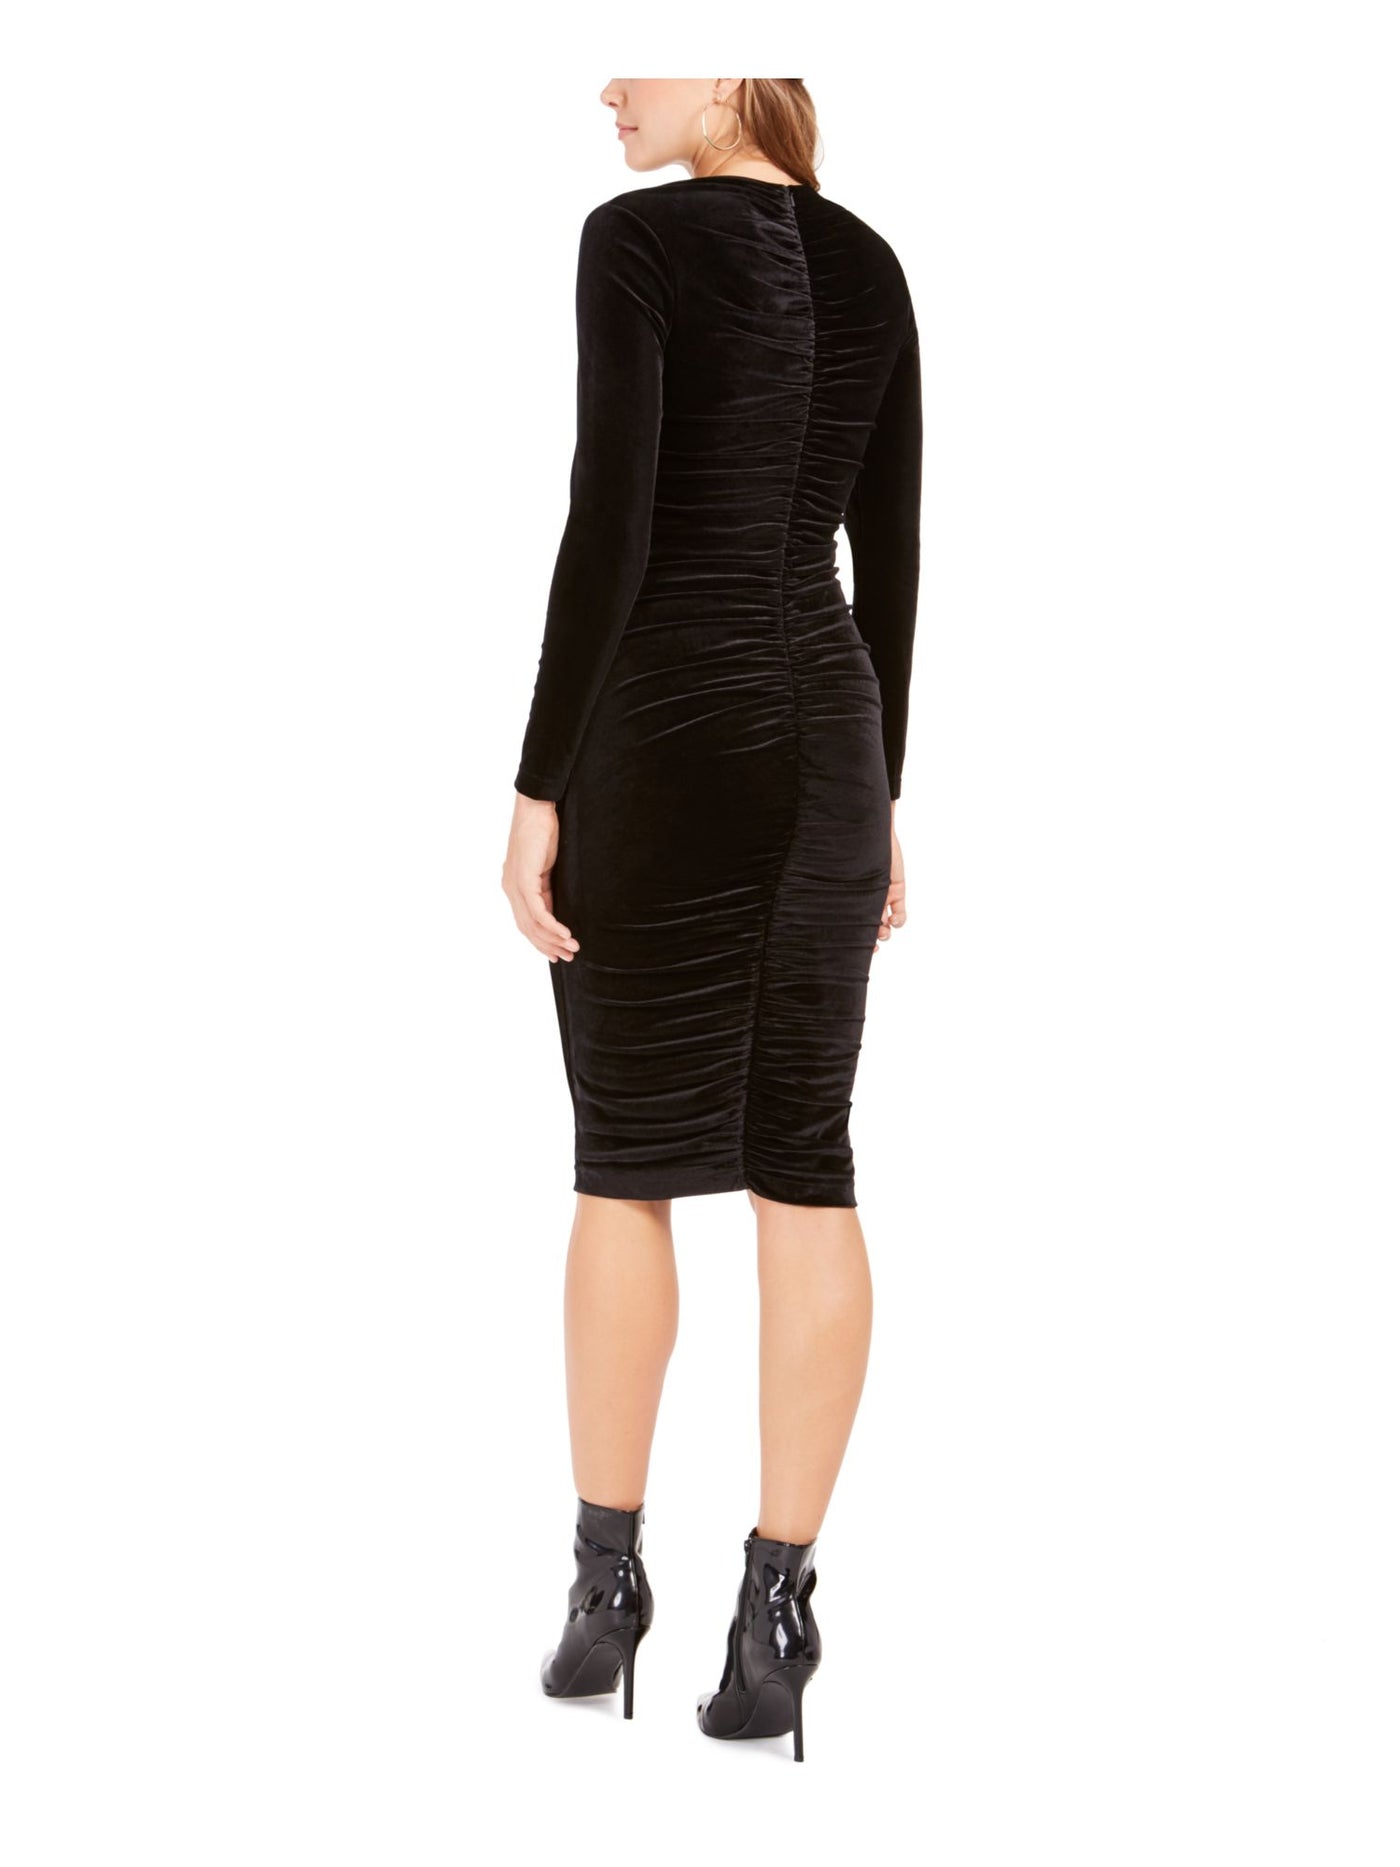 BARDOT Womens Black Long Sleeve Jewel Neck Knee Length Evening Body Con Dress 6\S